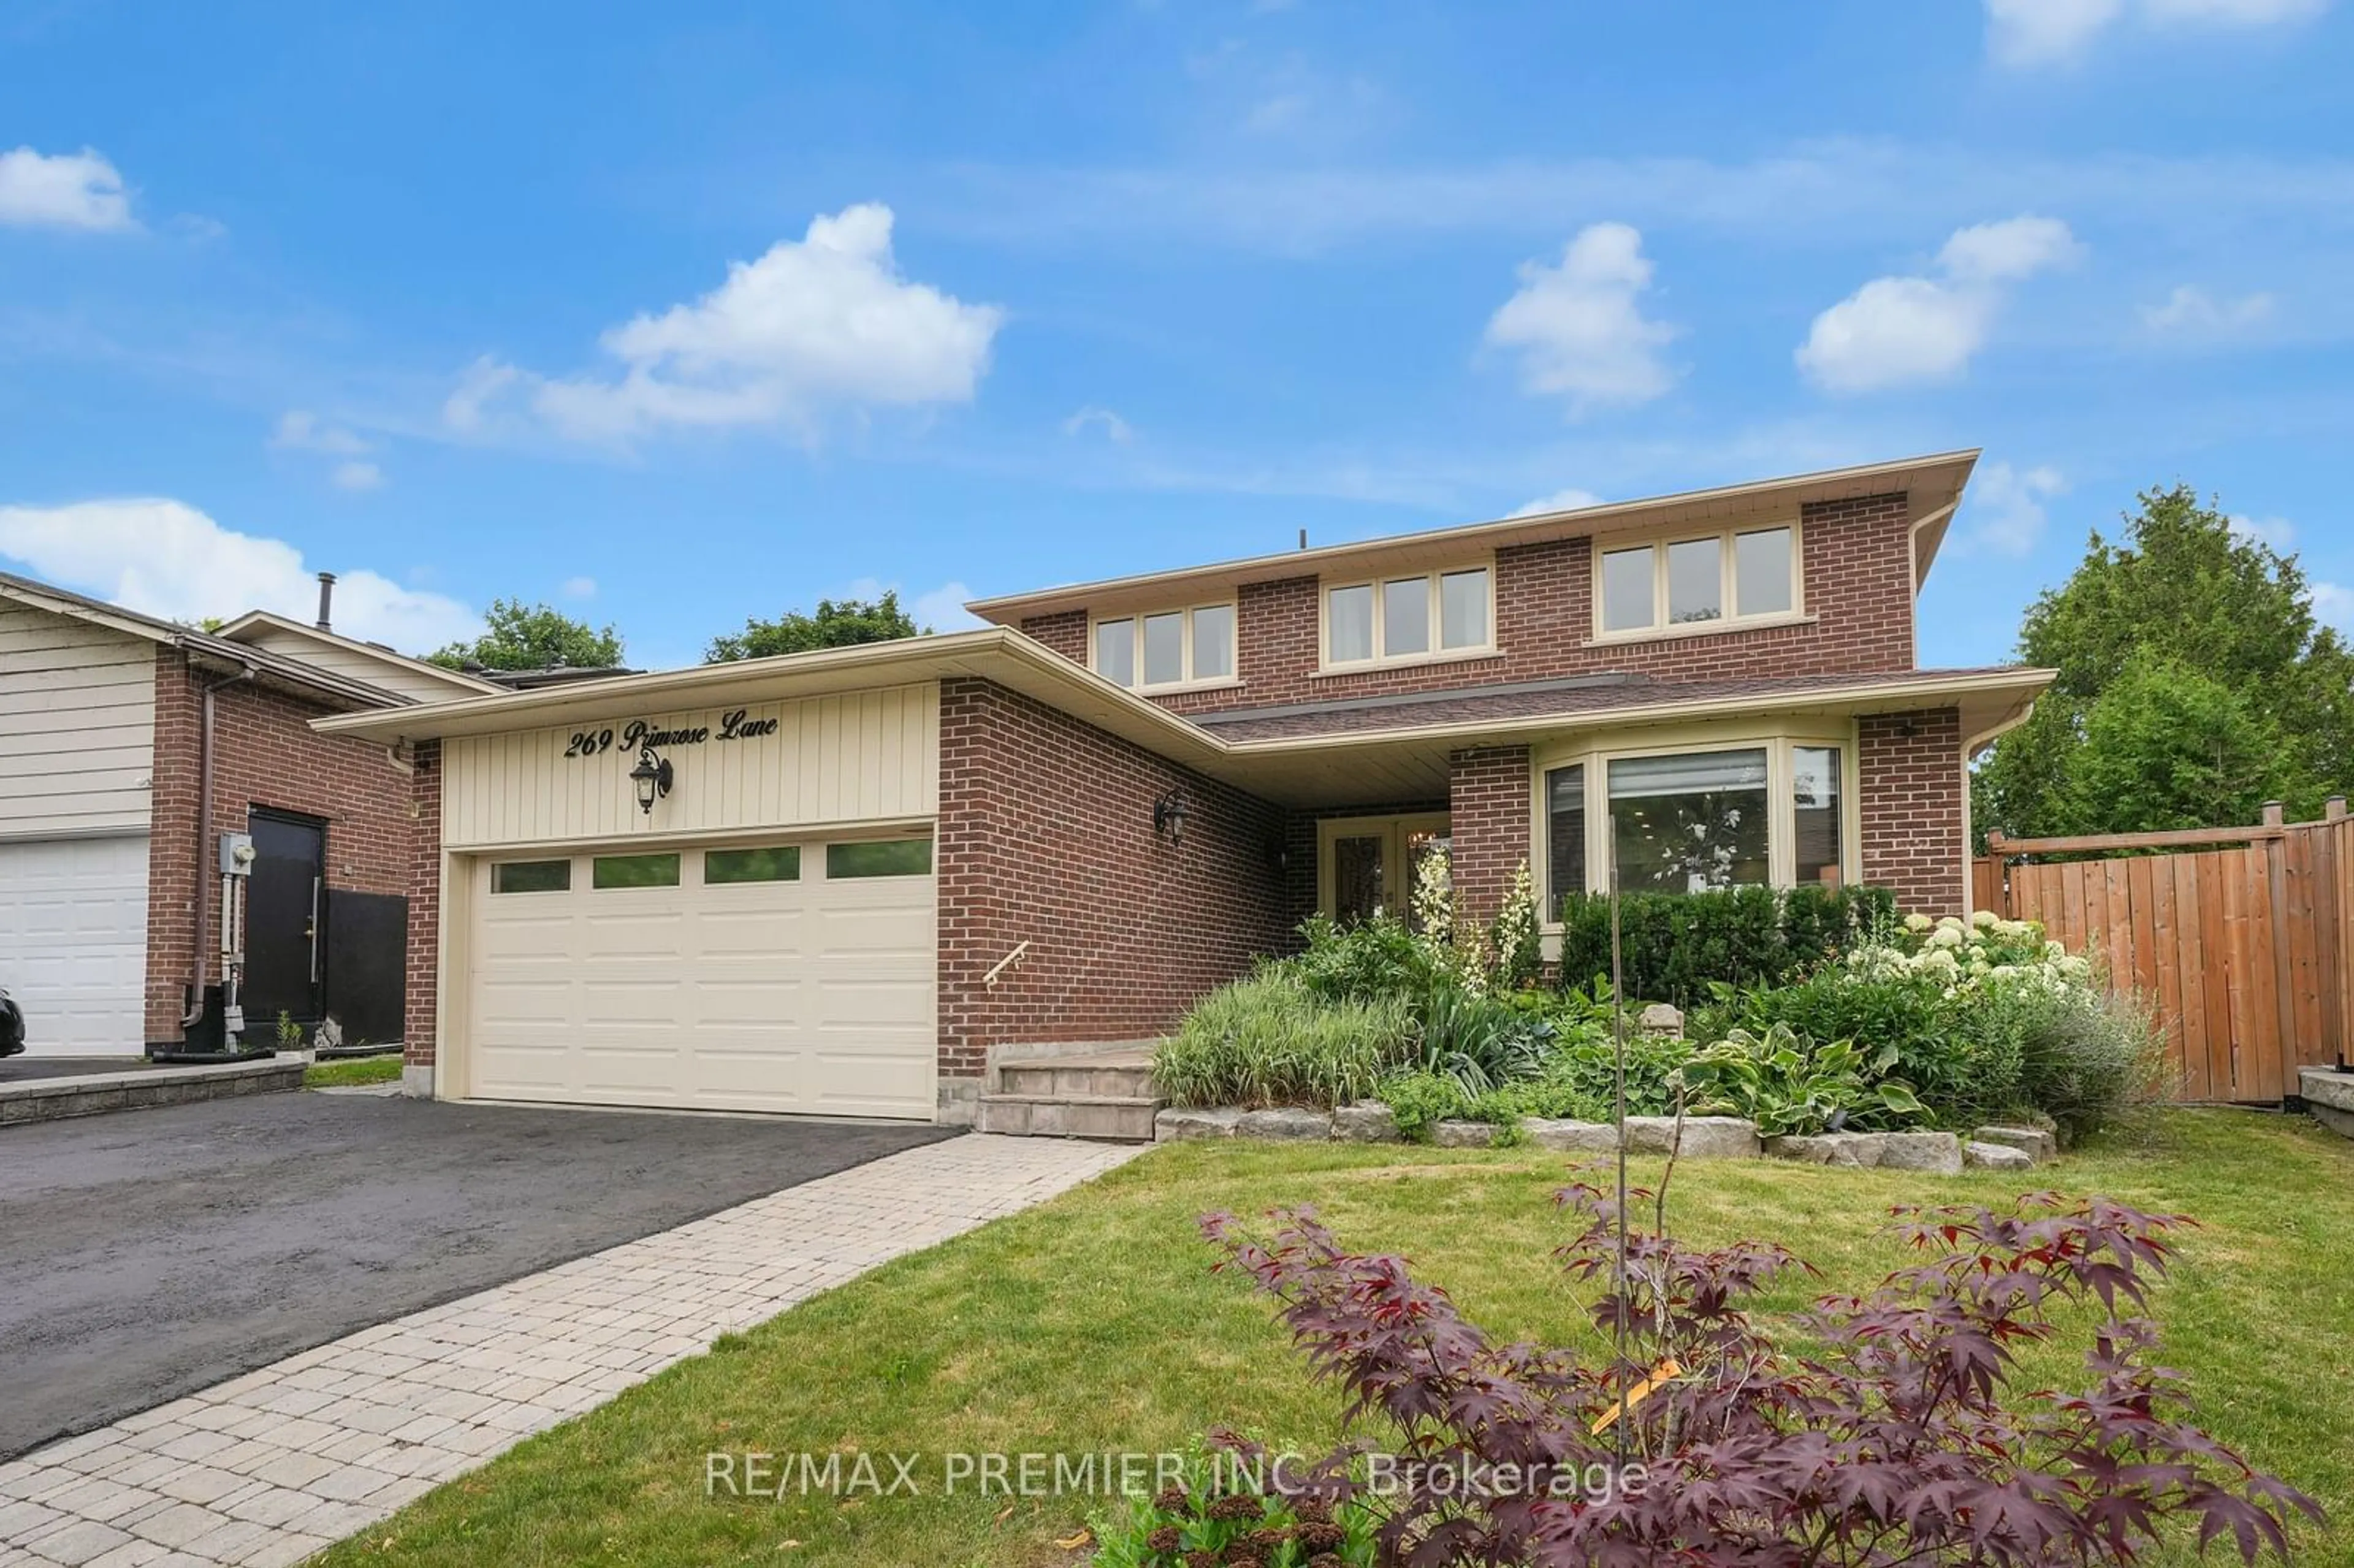 Home with brick exterior material for 269 Primrose Lane, Newmarket Ontario L3Y 5Y7